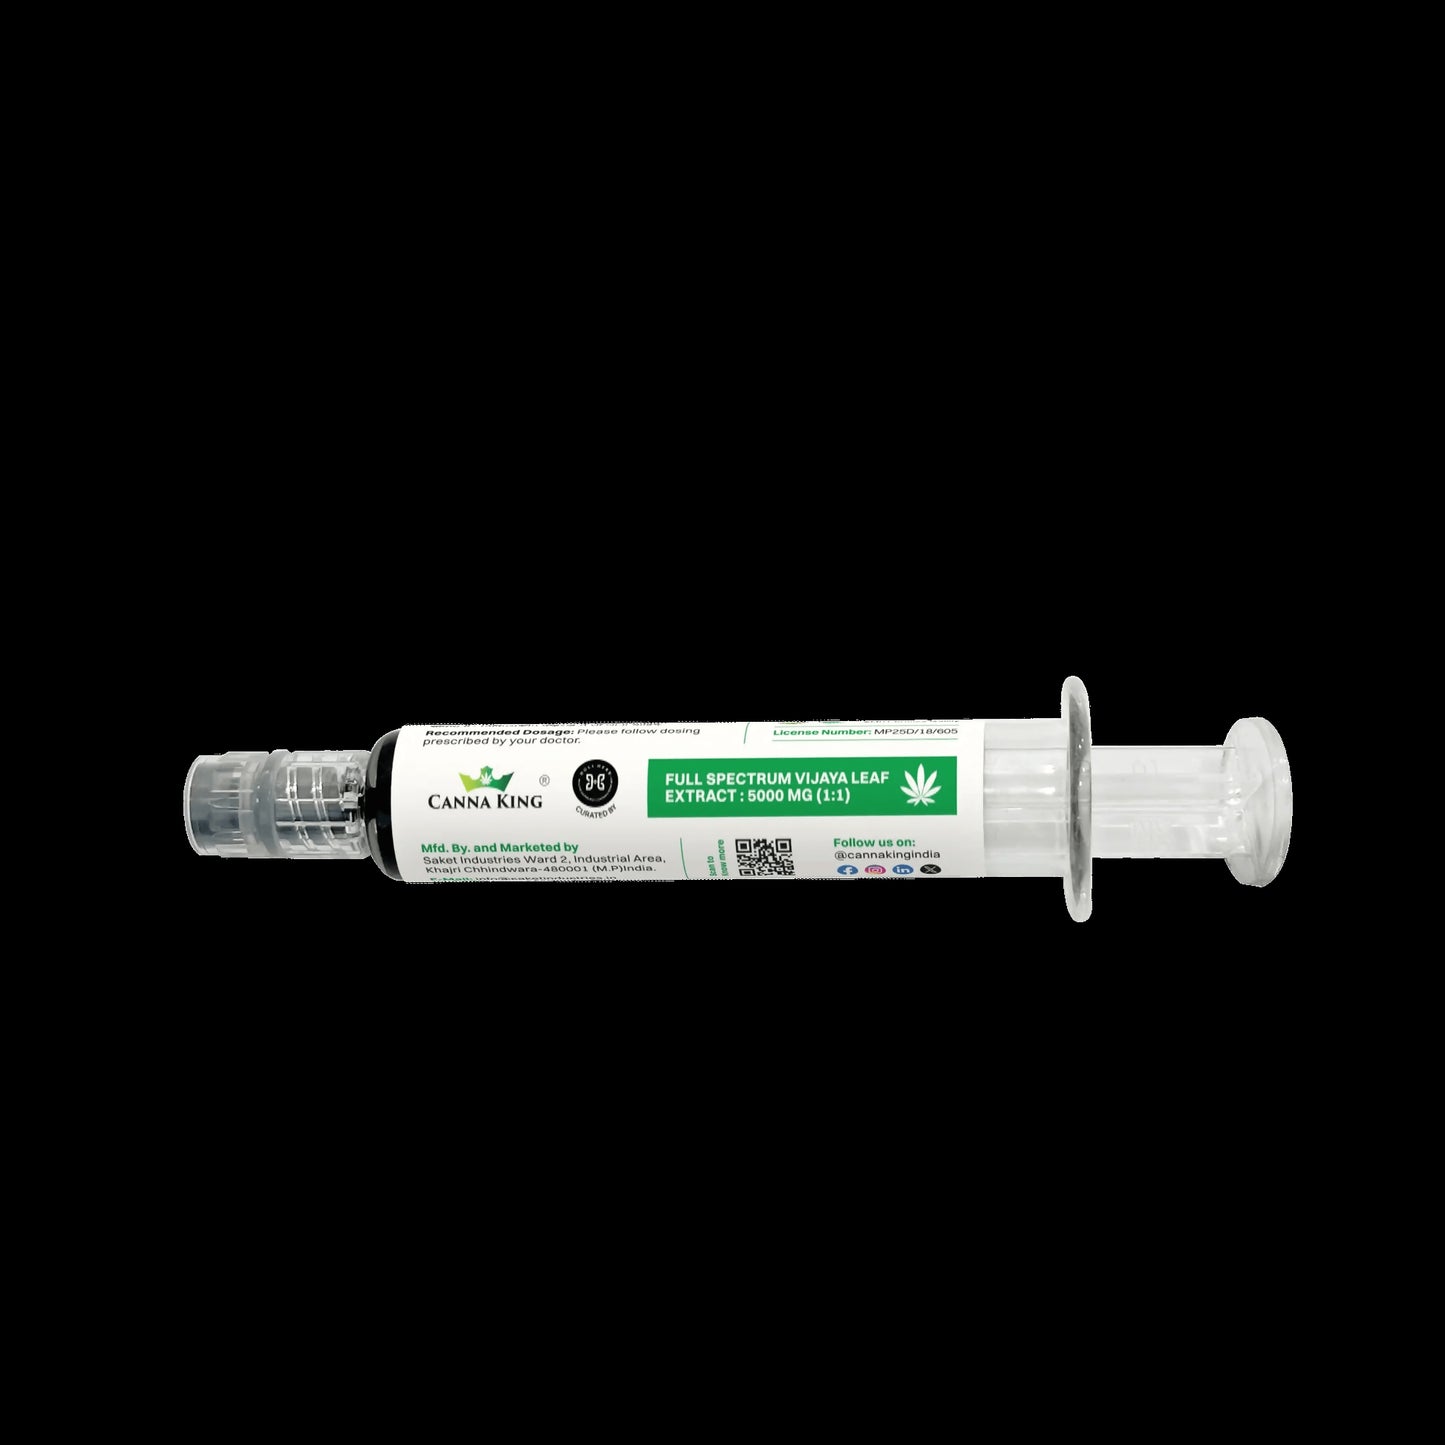 Cannaking - Full Spectrum Vijaya Extract, 5000 mg, 1:1 CBD: THC